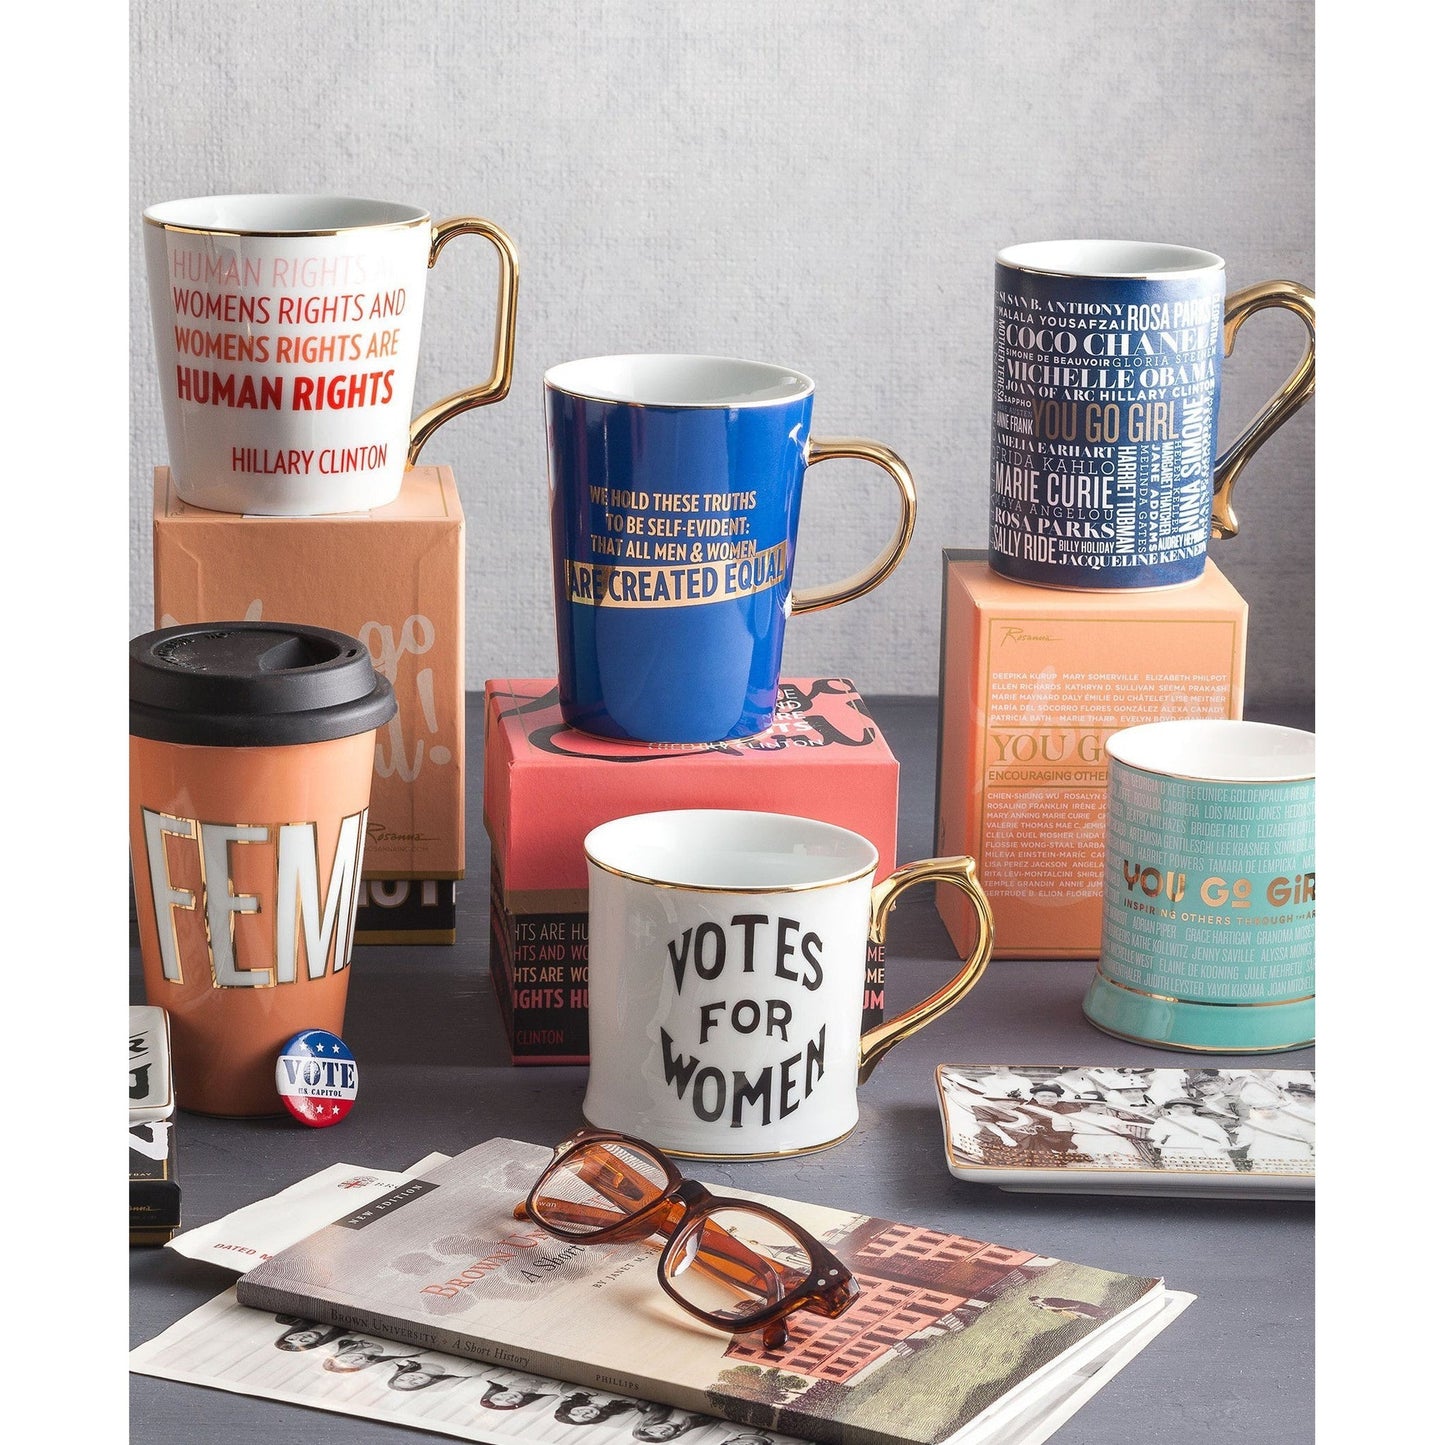 Women's Suffrage Seneca Falls Declarations Porcelain and Gold Coffee Mug in Gift Box